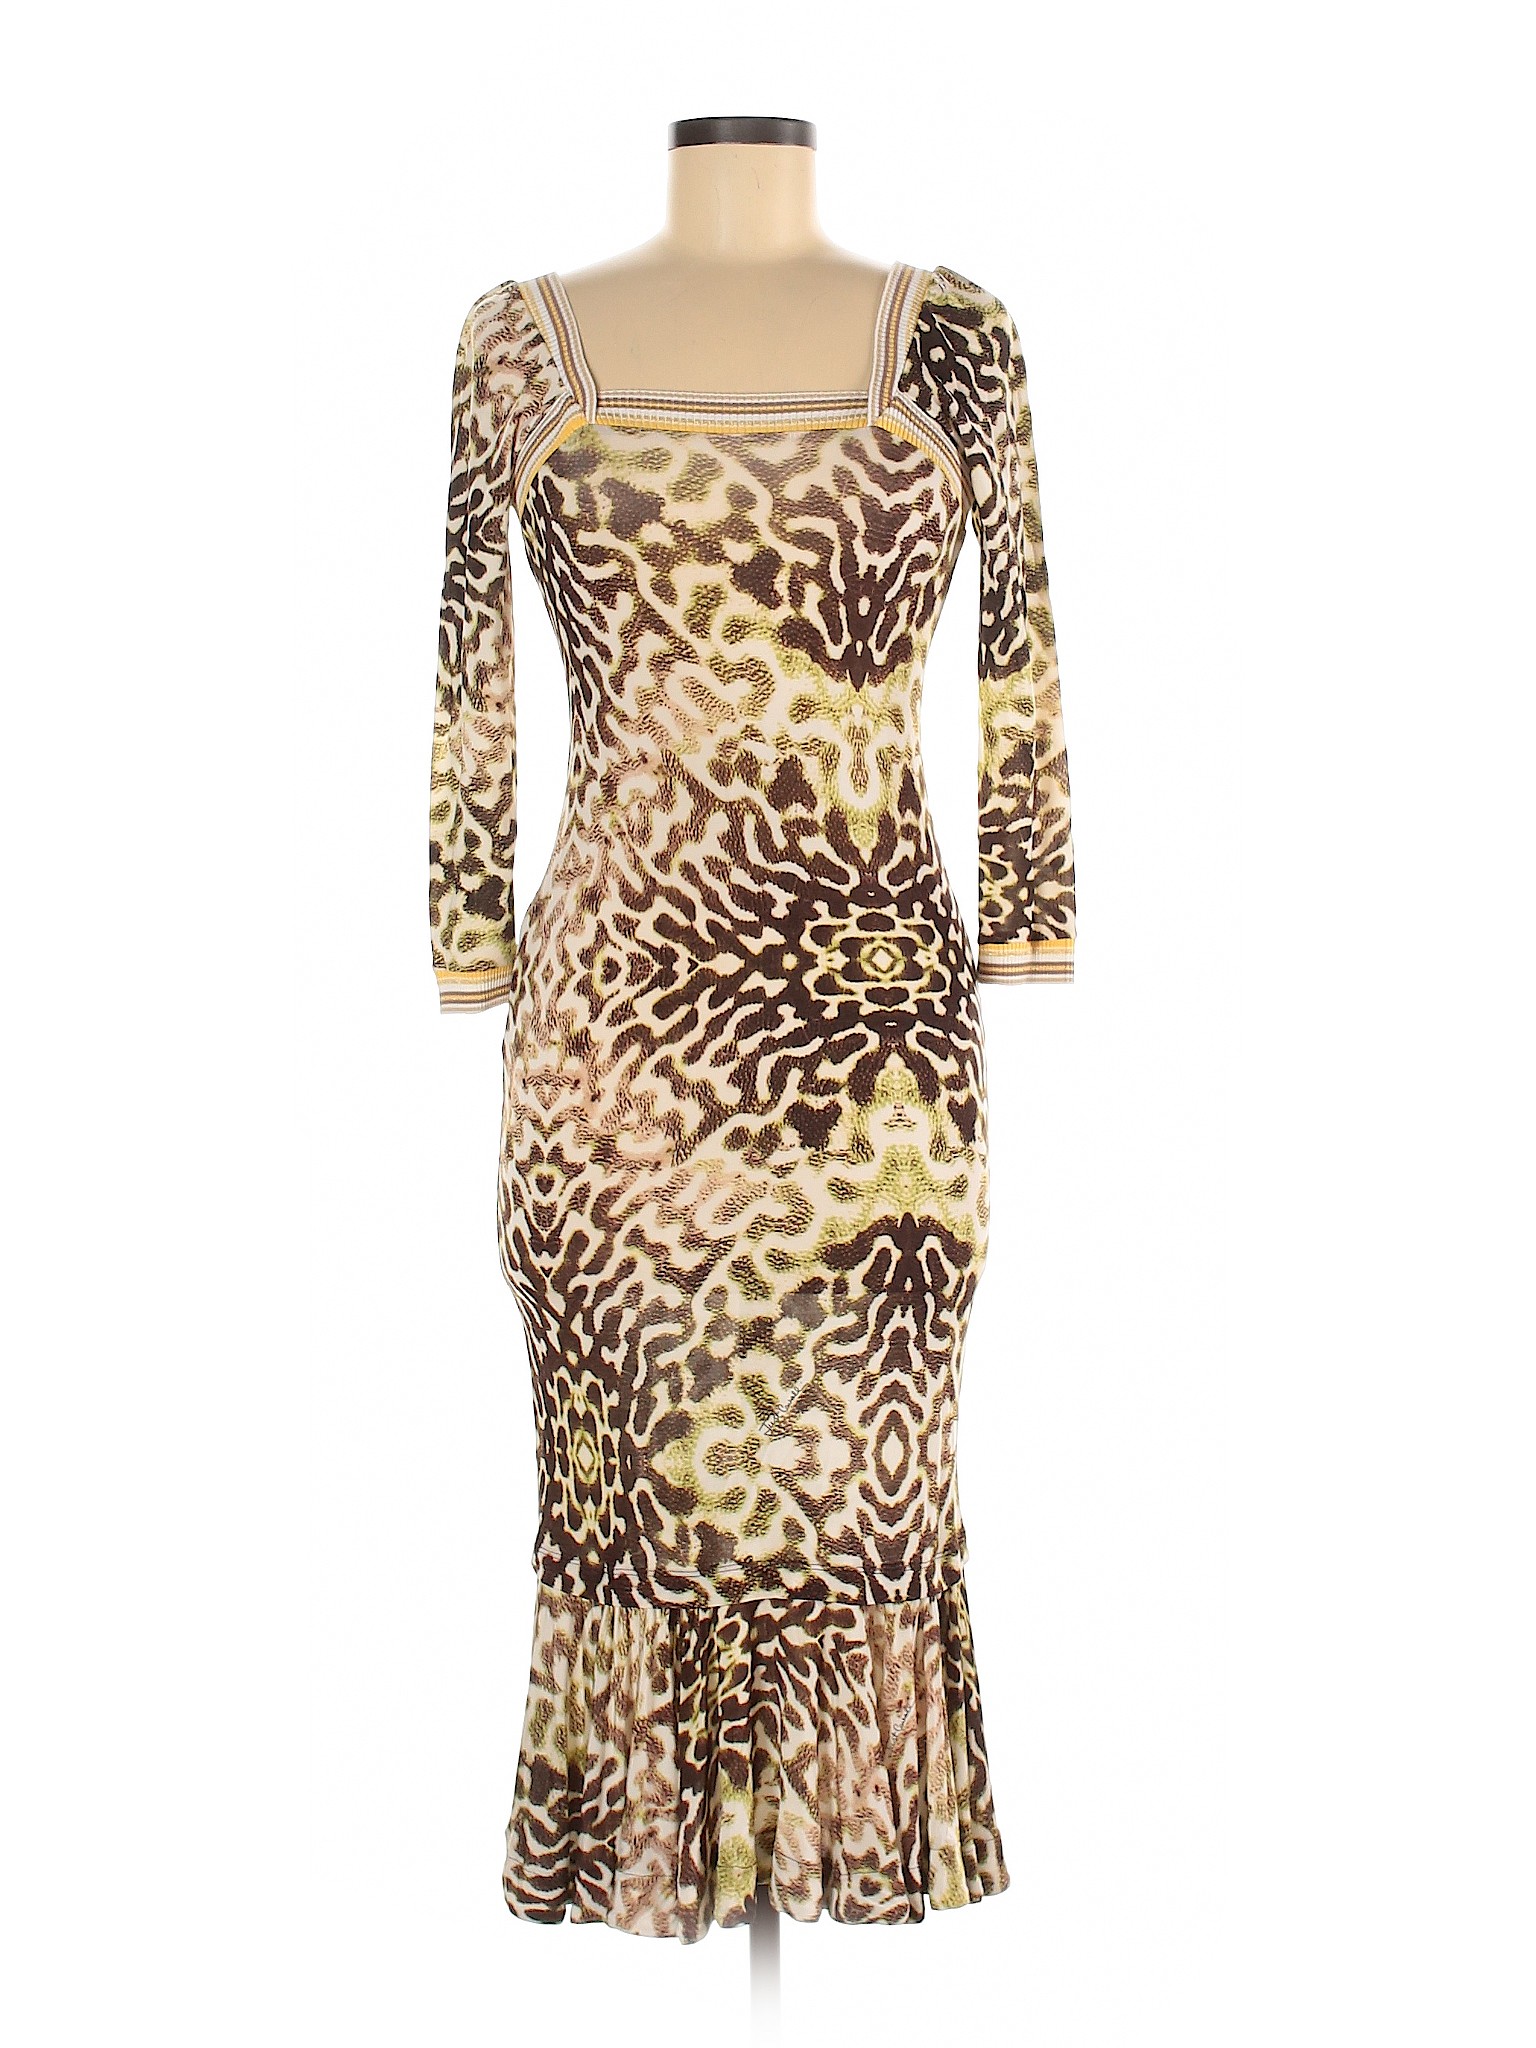 Just Cavalli Animal Print Brown Casual Dress Size 42 (IT) - 62% off ...